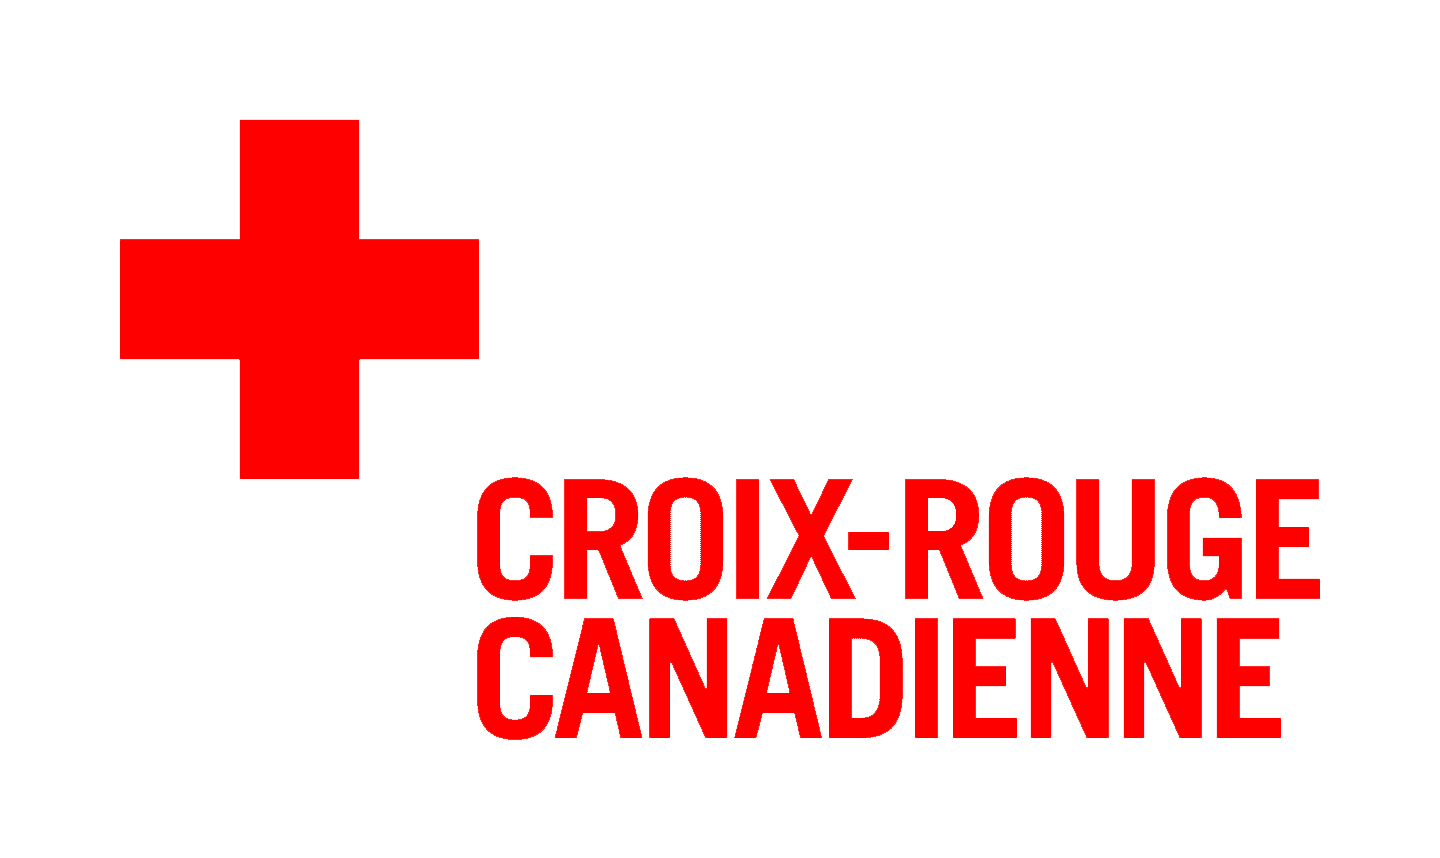 Croix-rouge canadienne